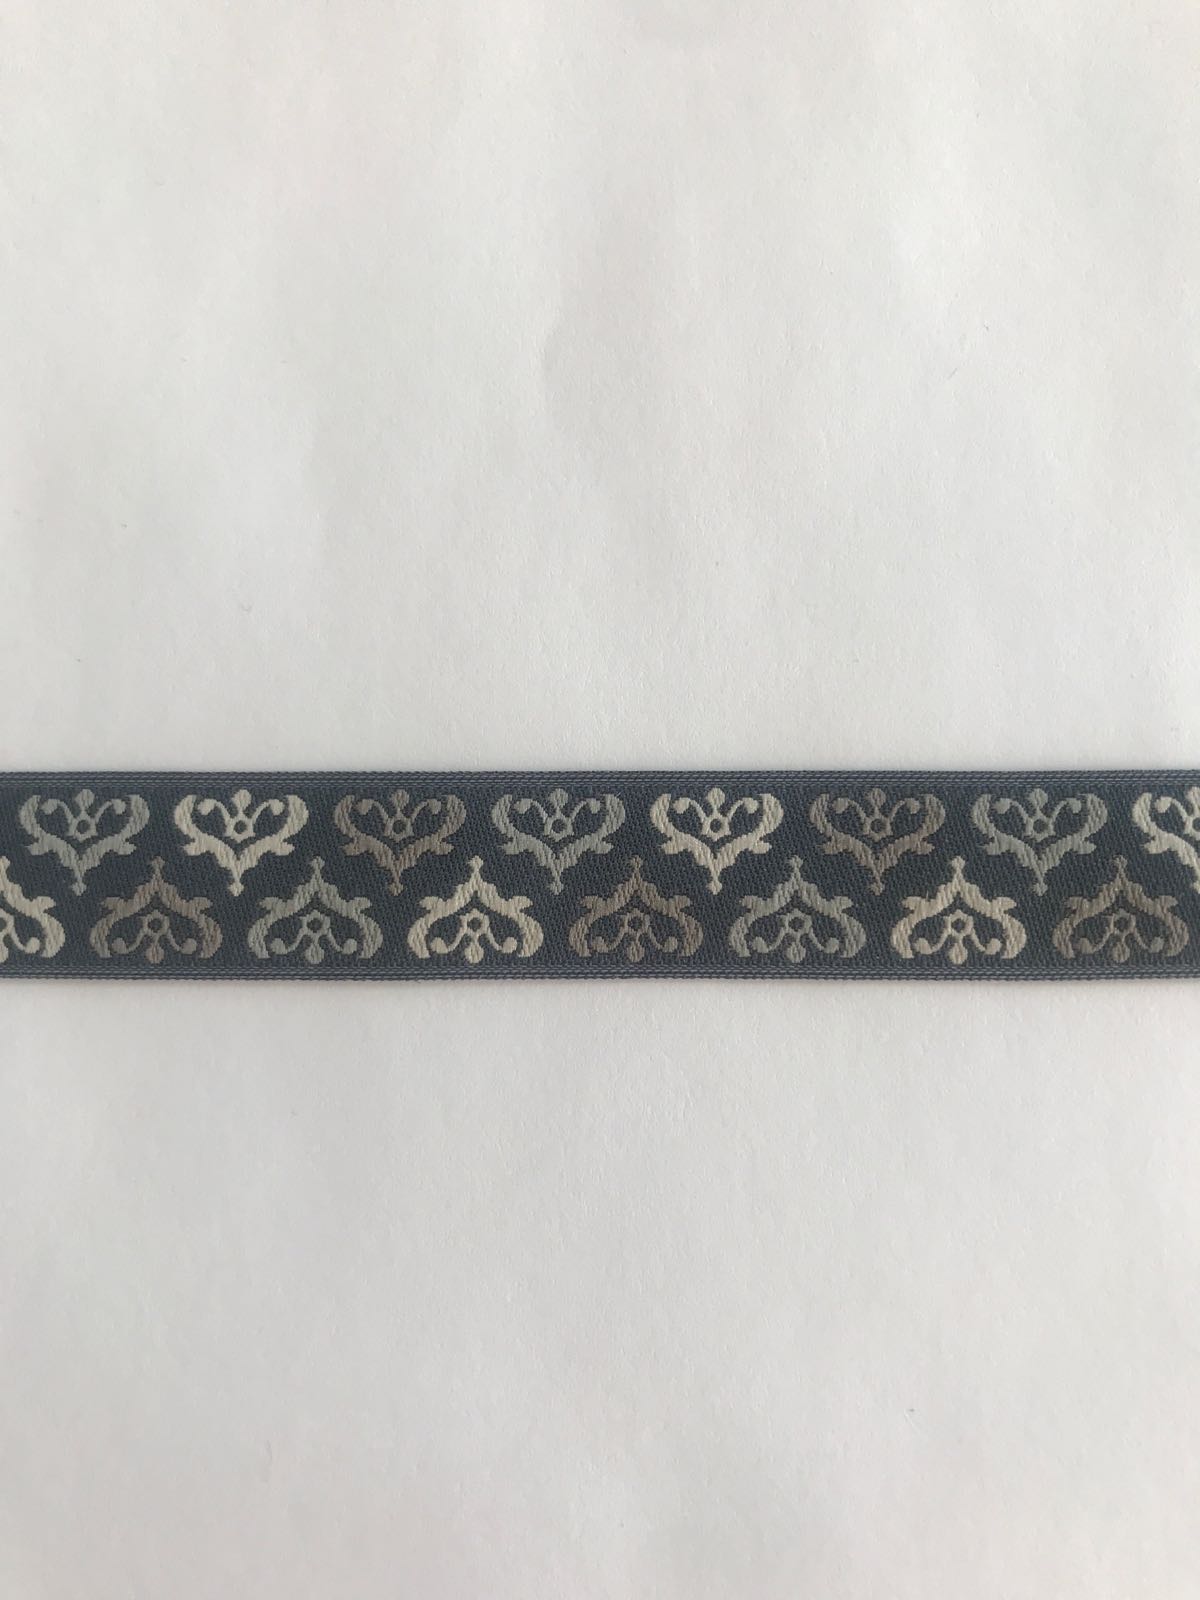 Patterned ribbon 16 mm